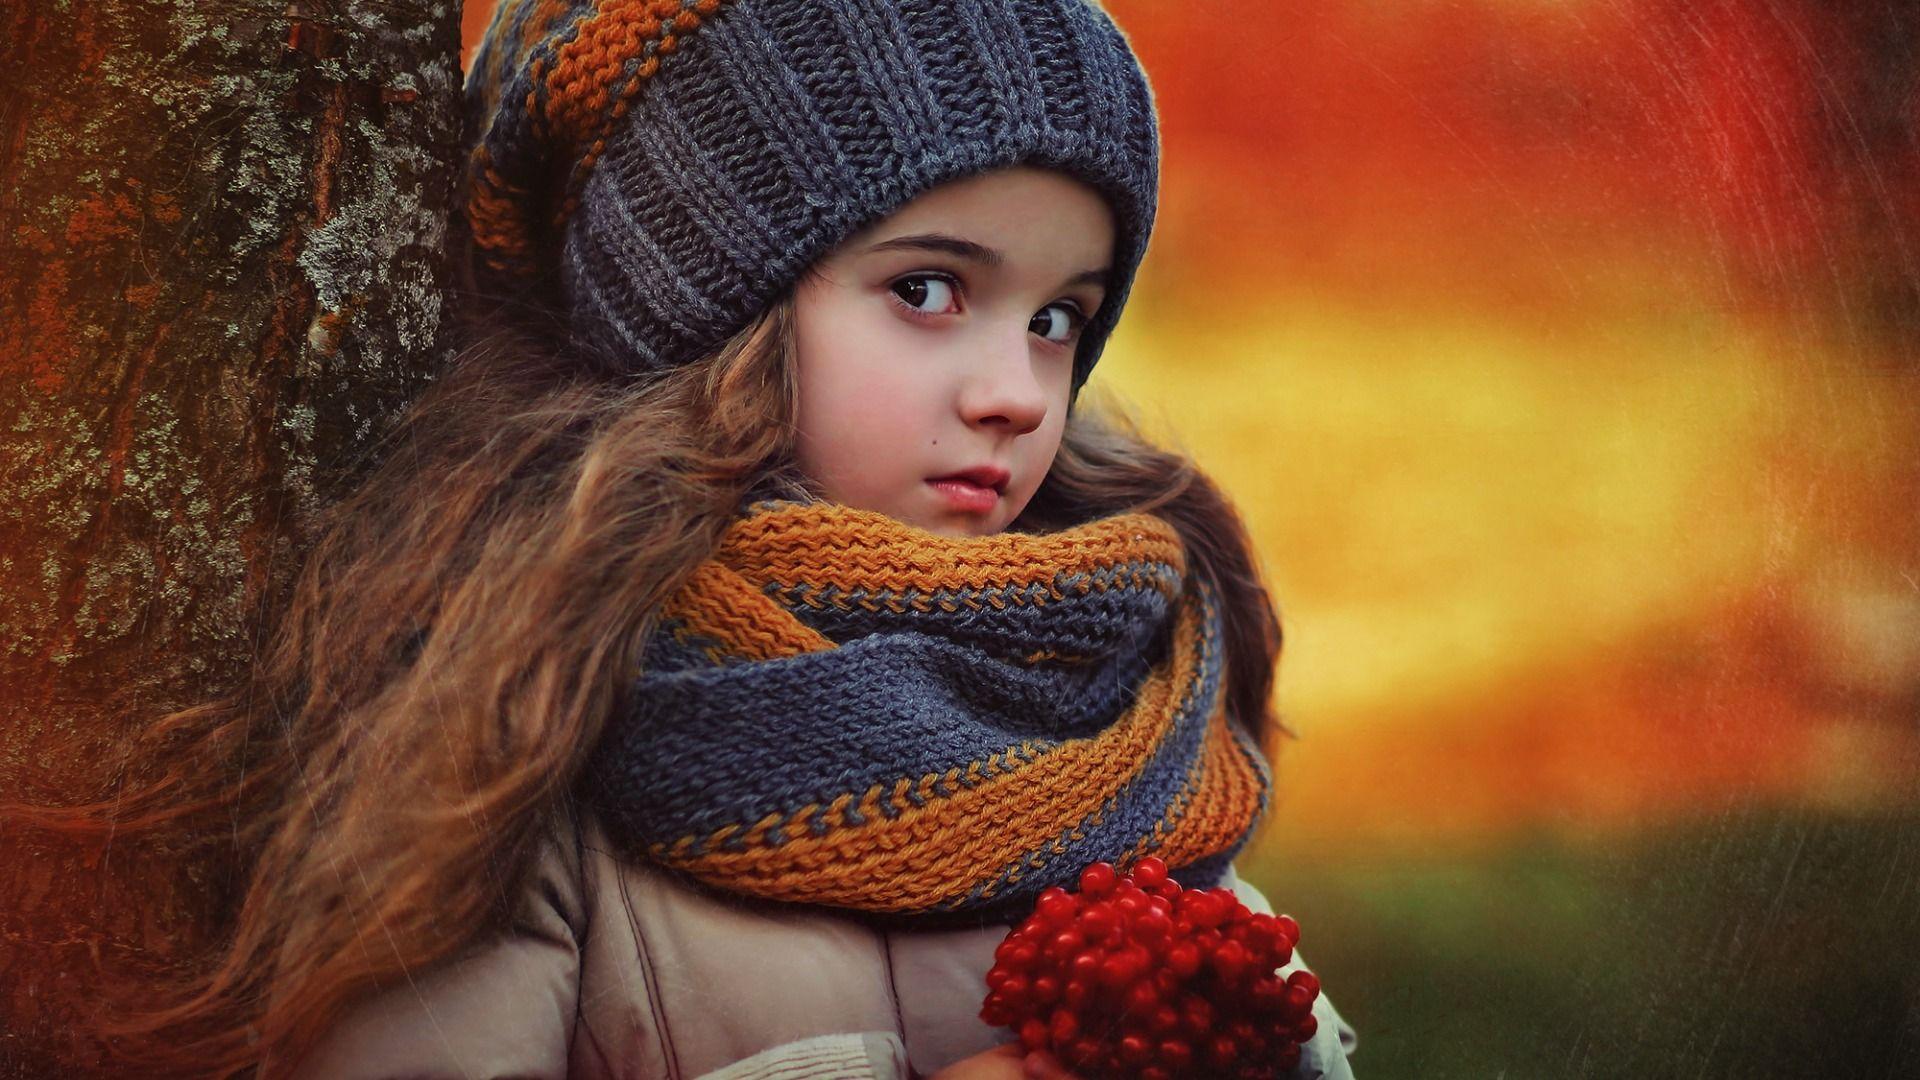 Download wallpaper child, girl, kids, nature, autumn, wood, berries